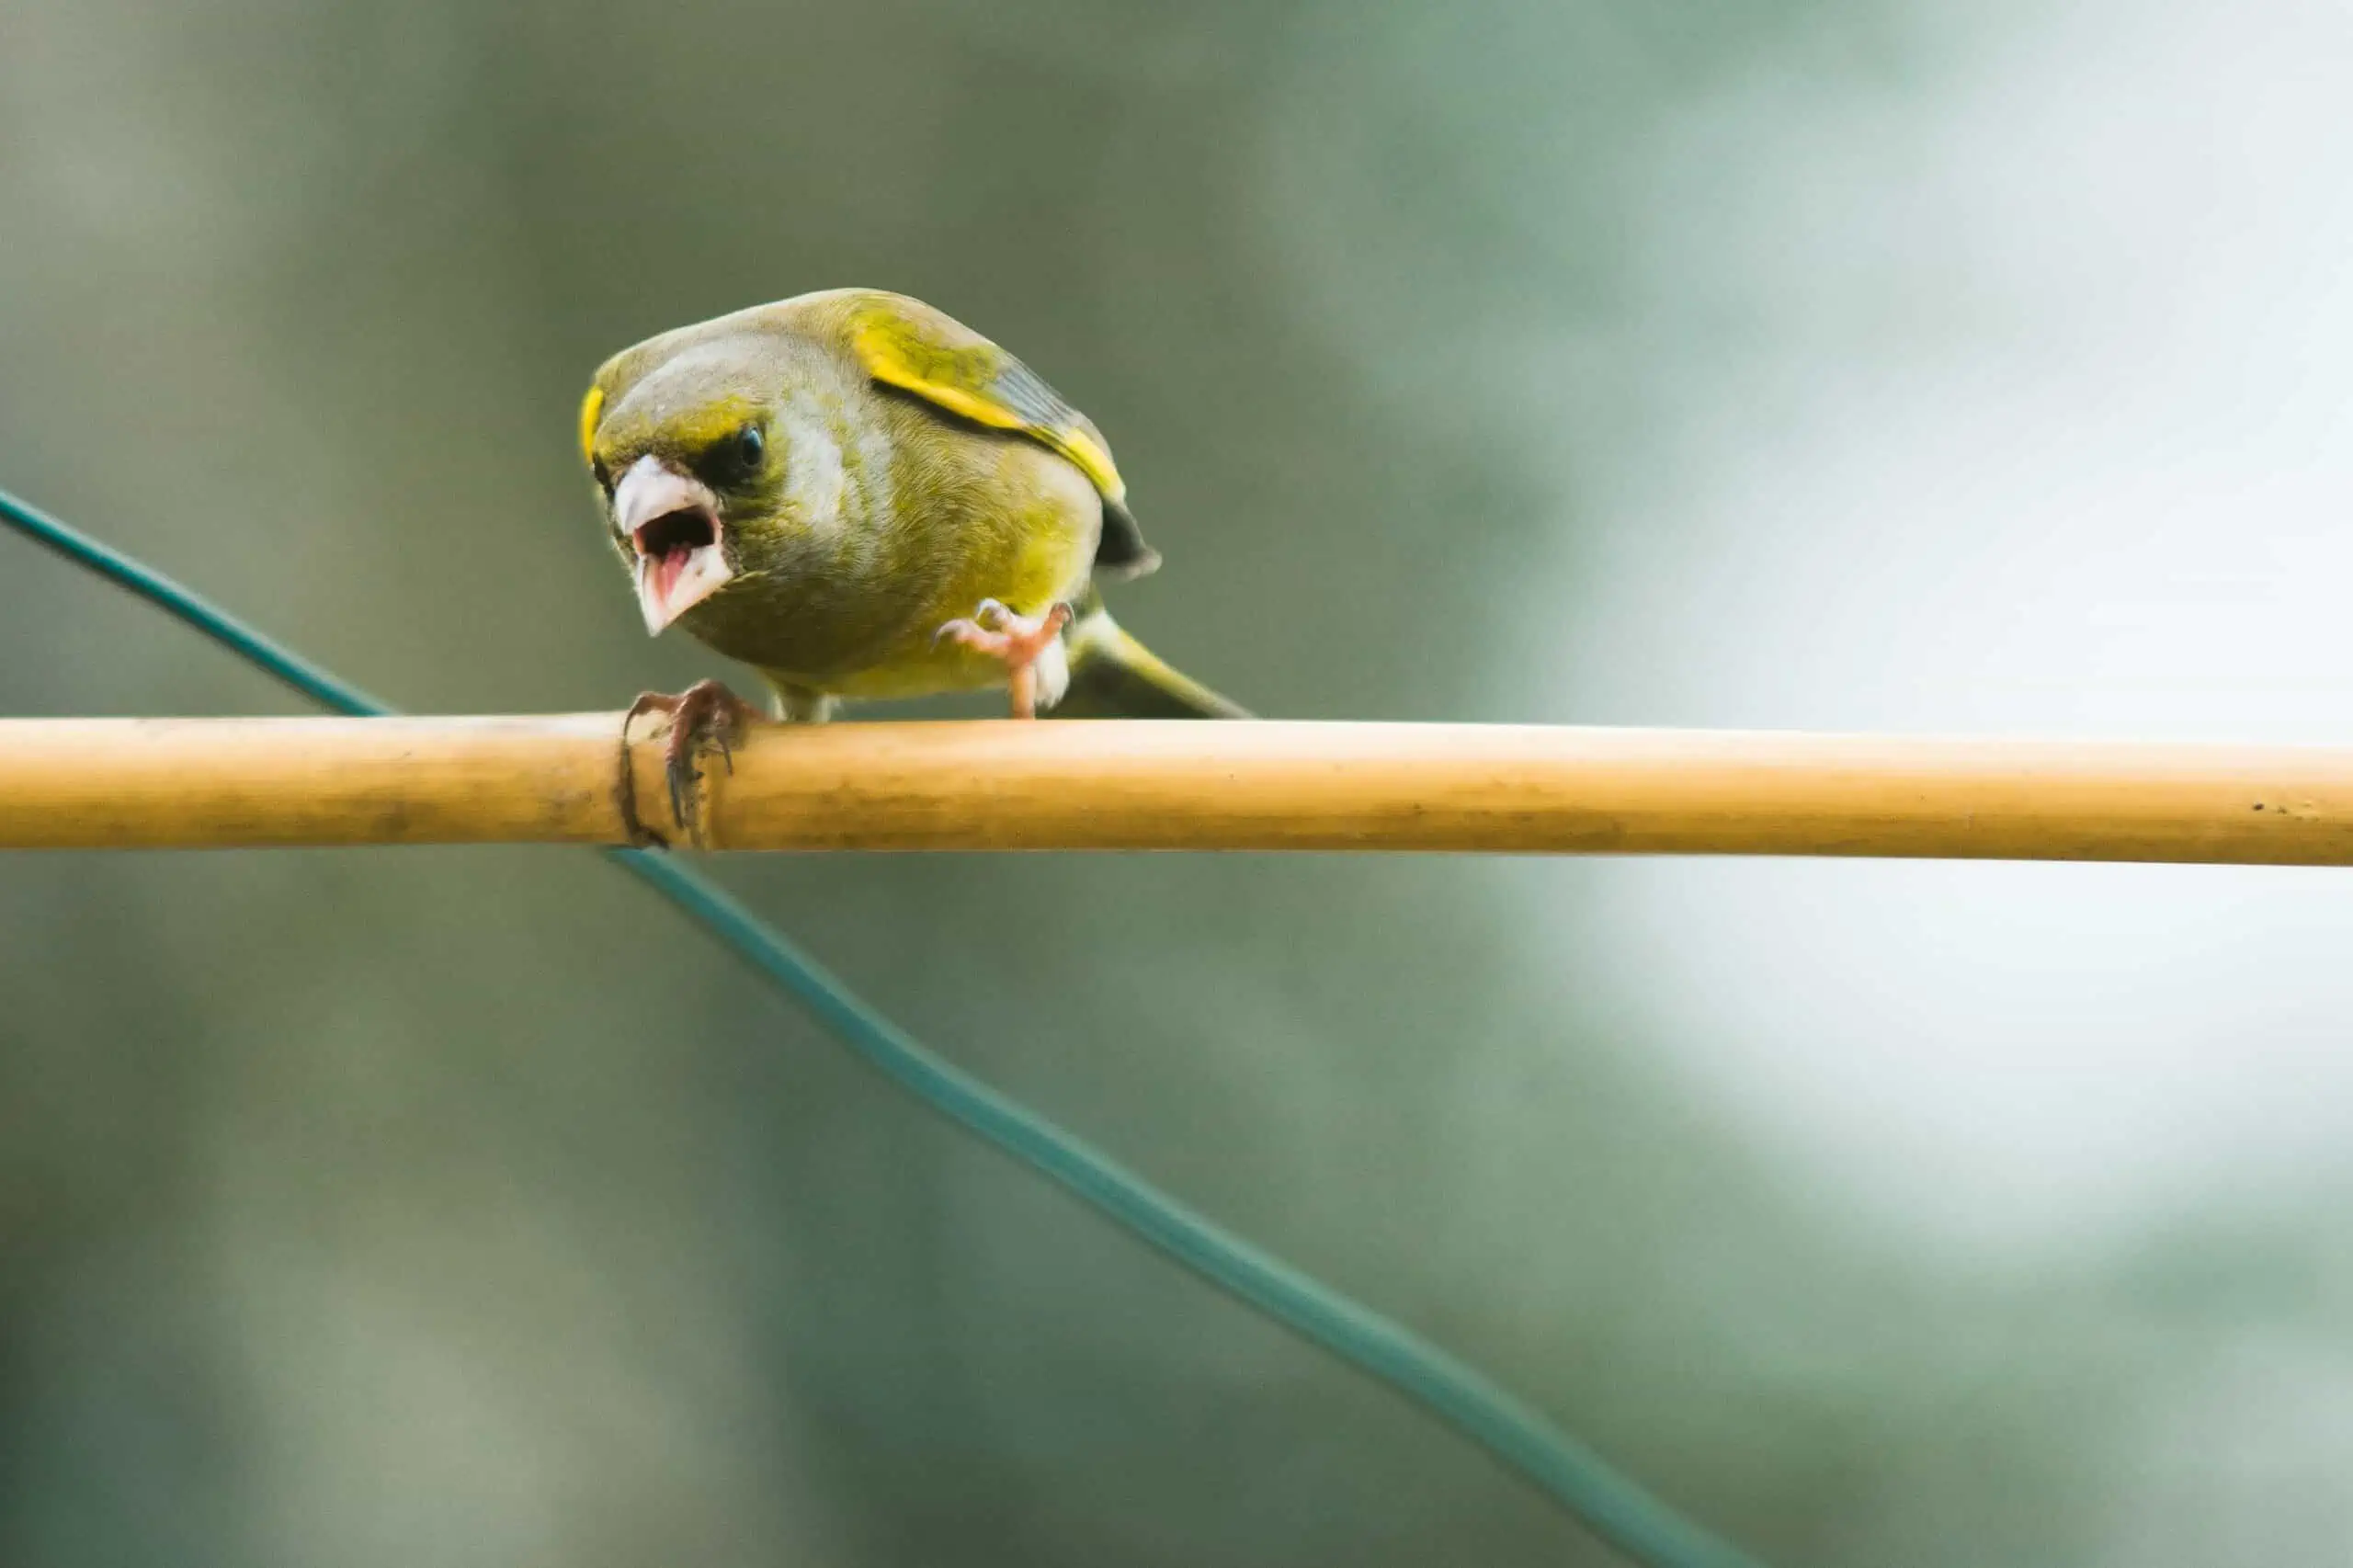 An angry bird yelling